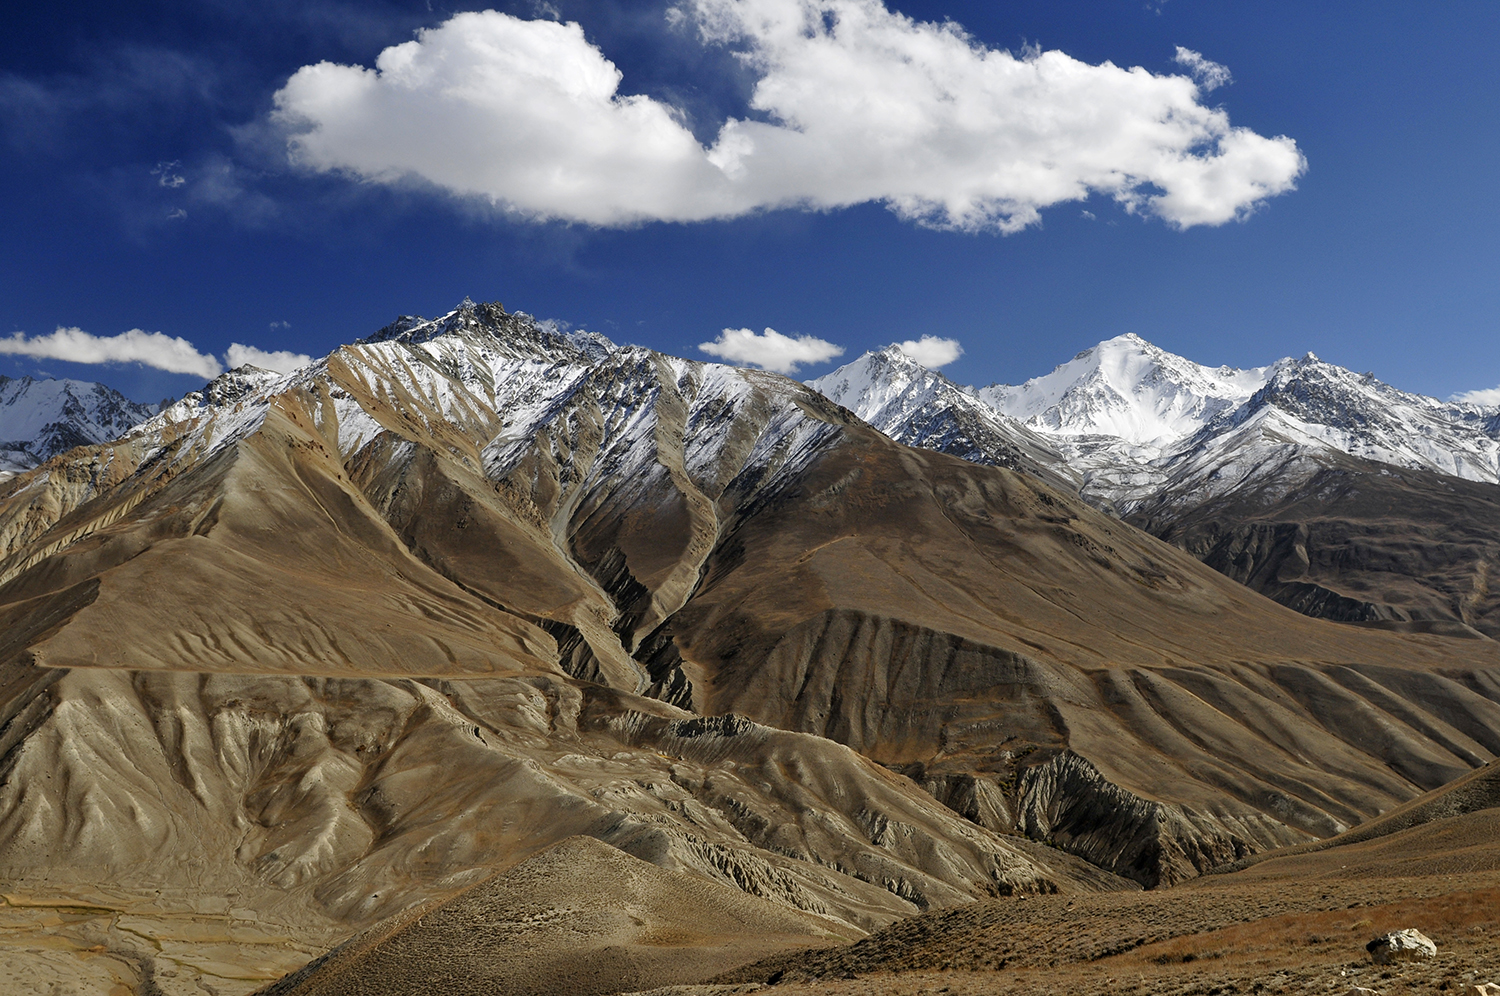 View of Hindu Kush in Afghanistan from Tajikistan